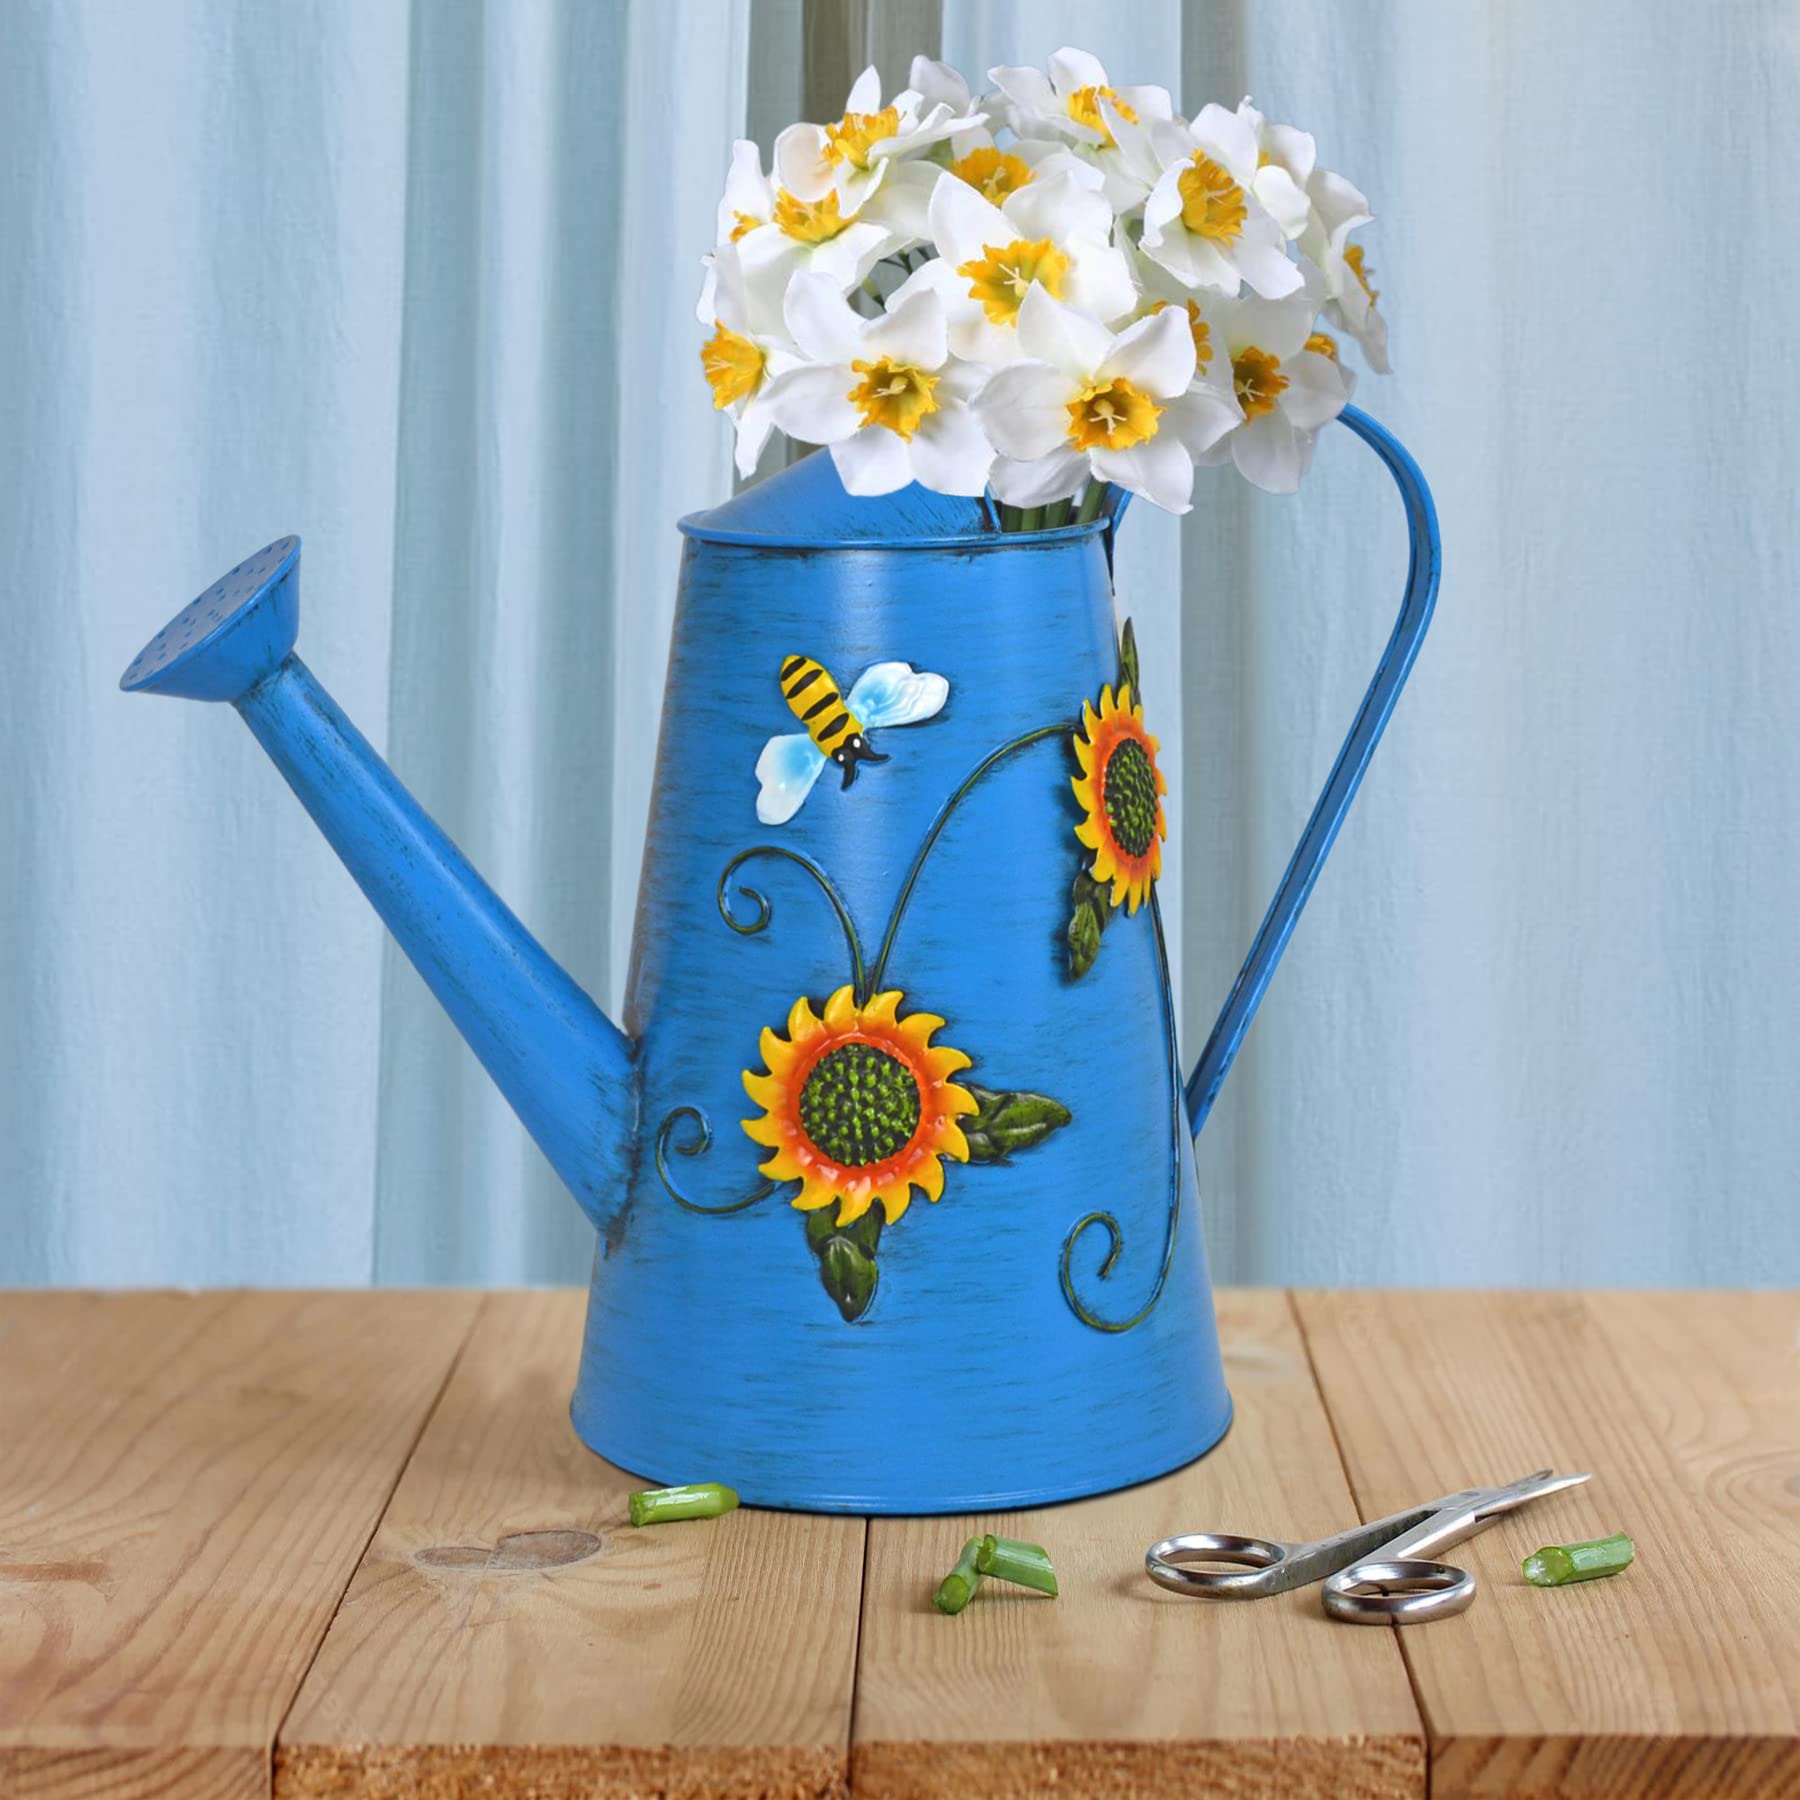 Westcharm Decorative 2.5 Liter Large Blue Sunflower & Bee Metal Watering Can (10 Cups | 80 OZ) | Home Garden Décor Housewarming Gift for Mother Women Friends Gardeners Plants Lovers